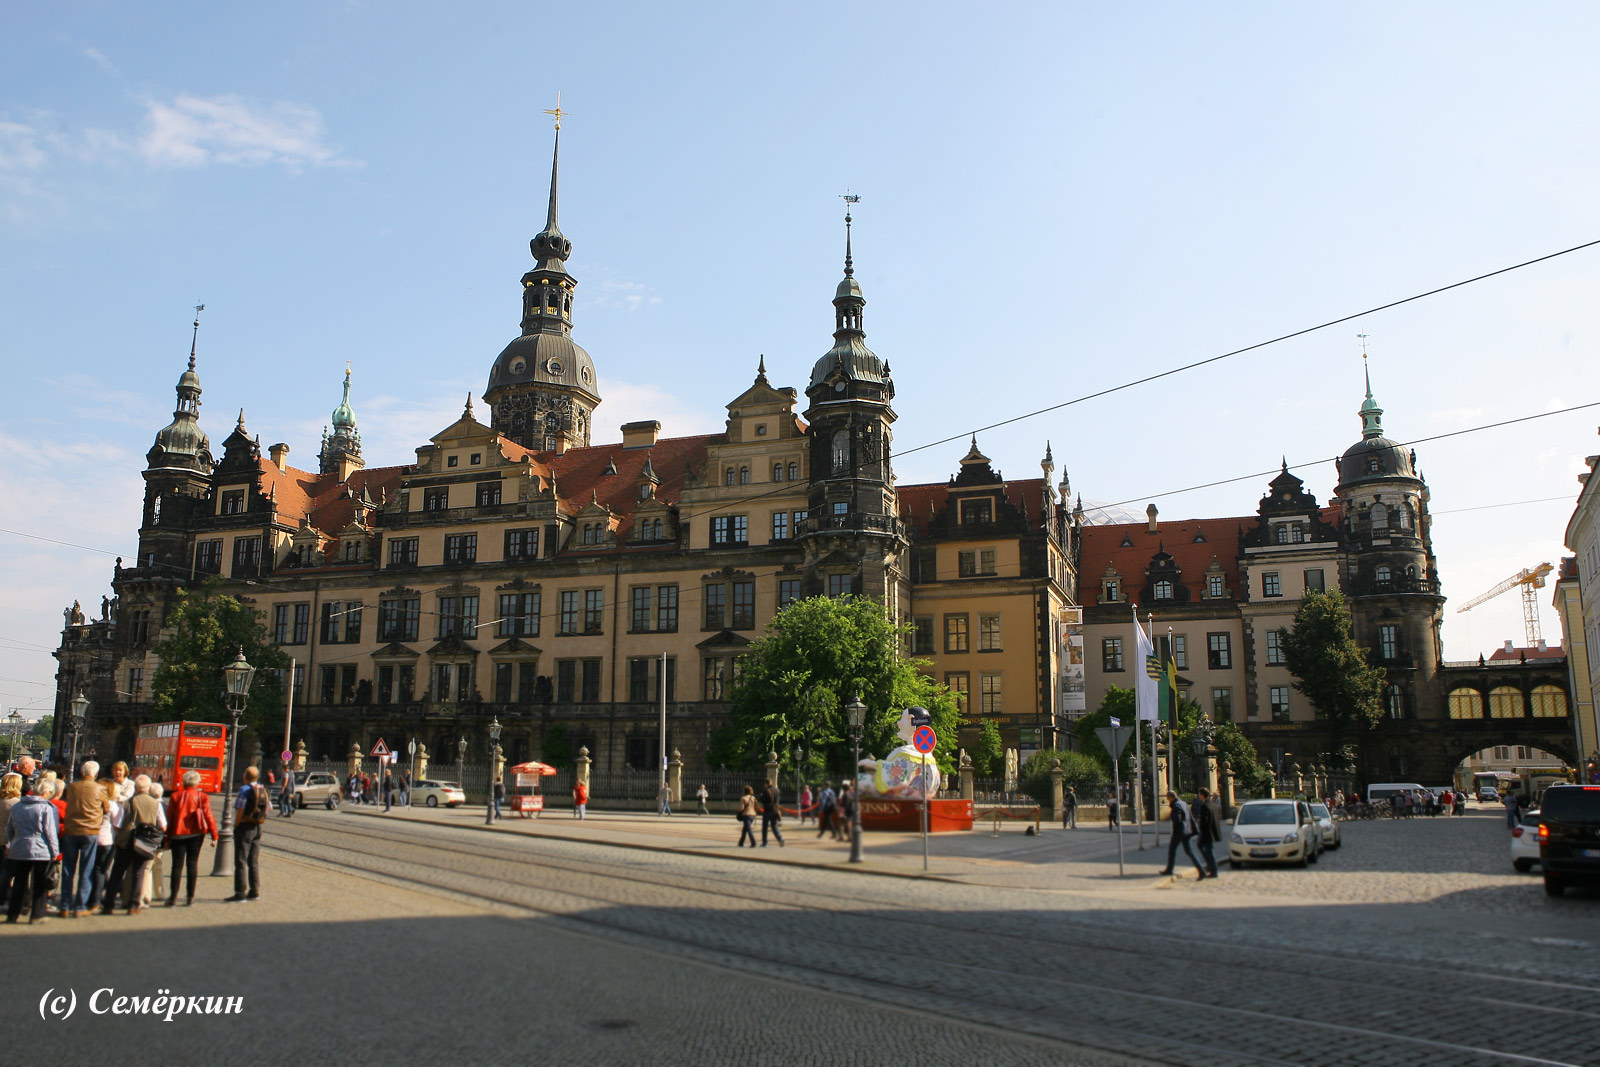 Солнечный Дрезден - Дрезденский замок-резиденция, также Дворец-резиденция, Dresdner Residenzschloss